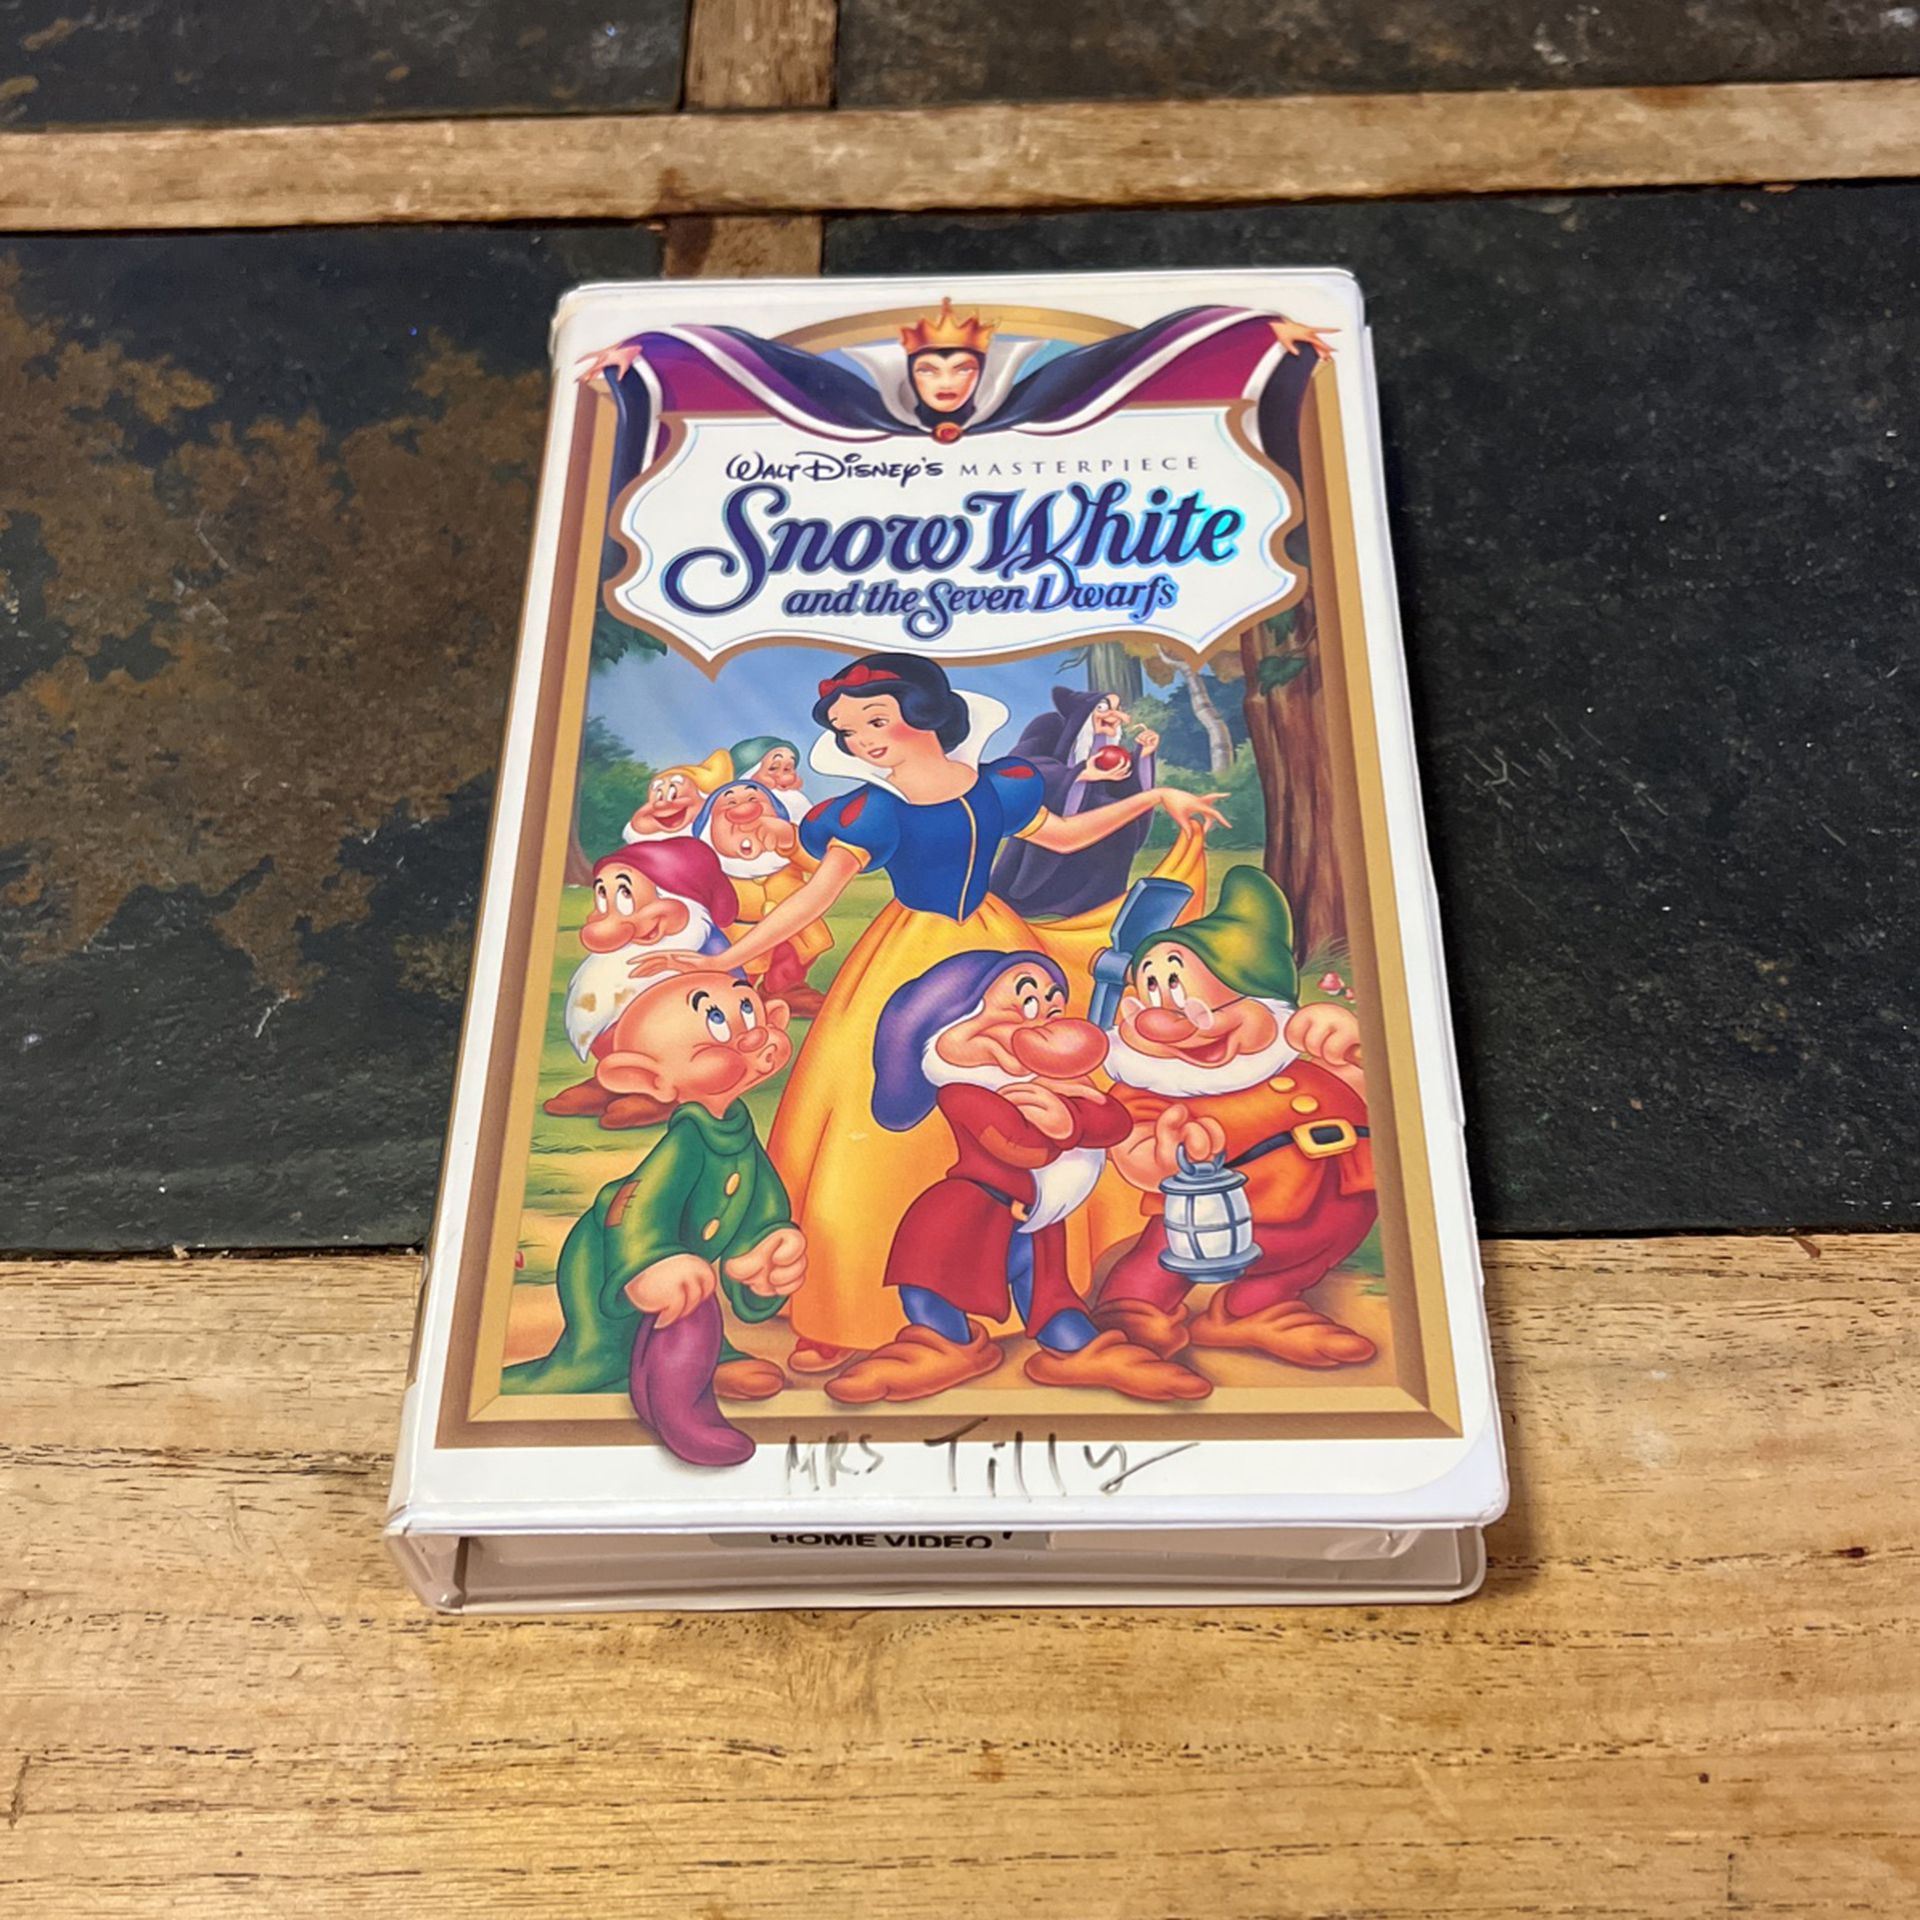 Snow White Disney VHS tested